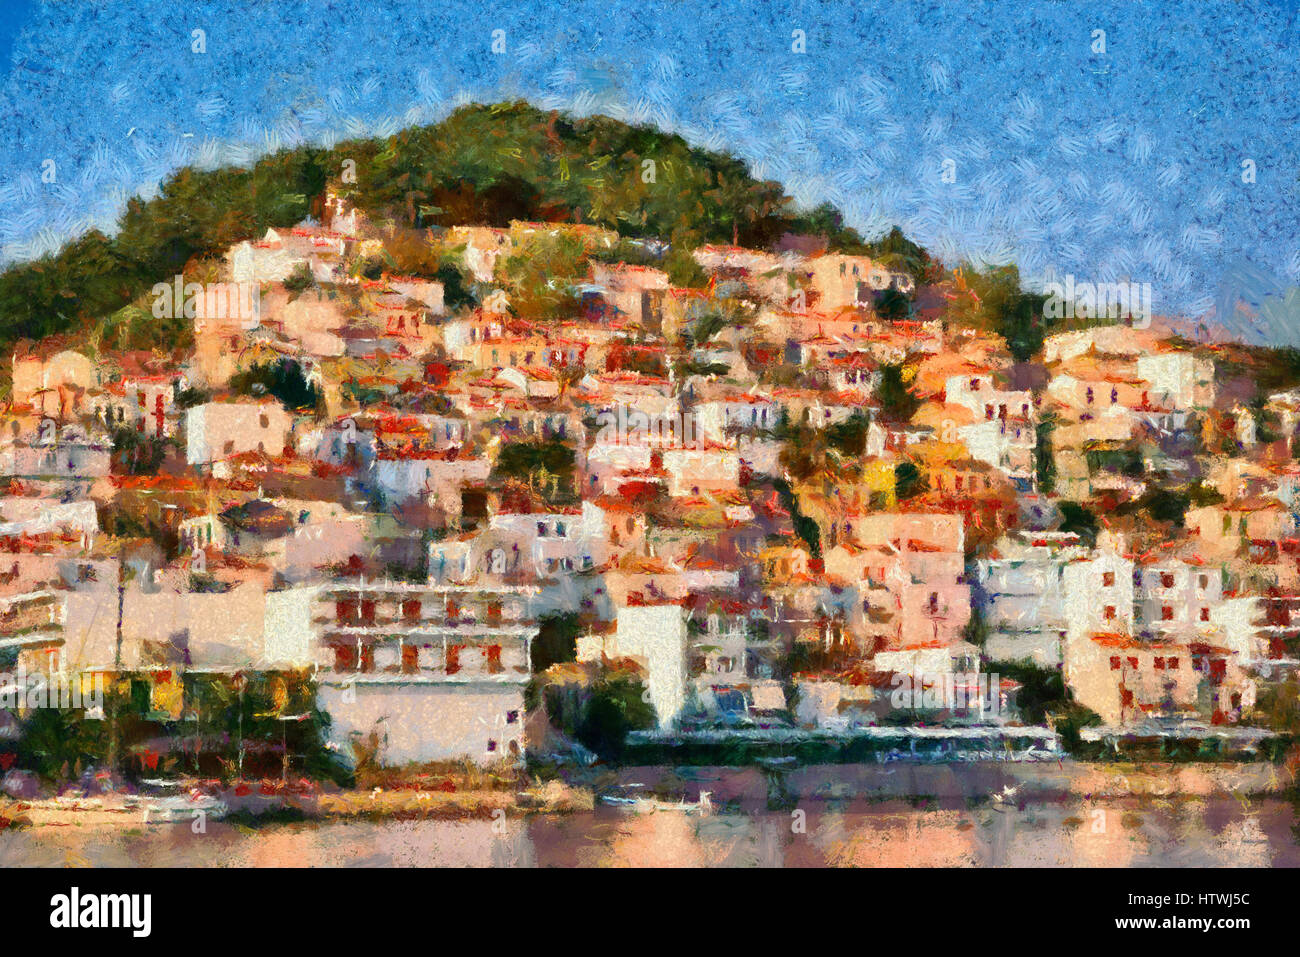 Plomari town in Lesvos island, Greece Stock Photo